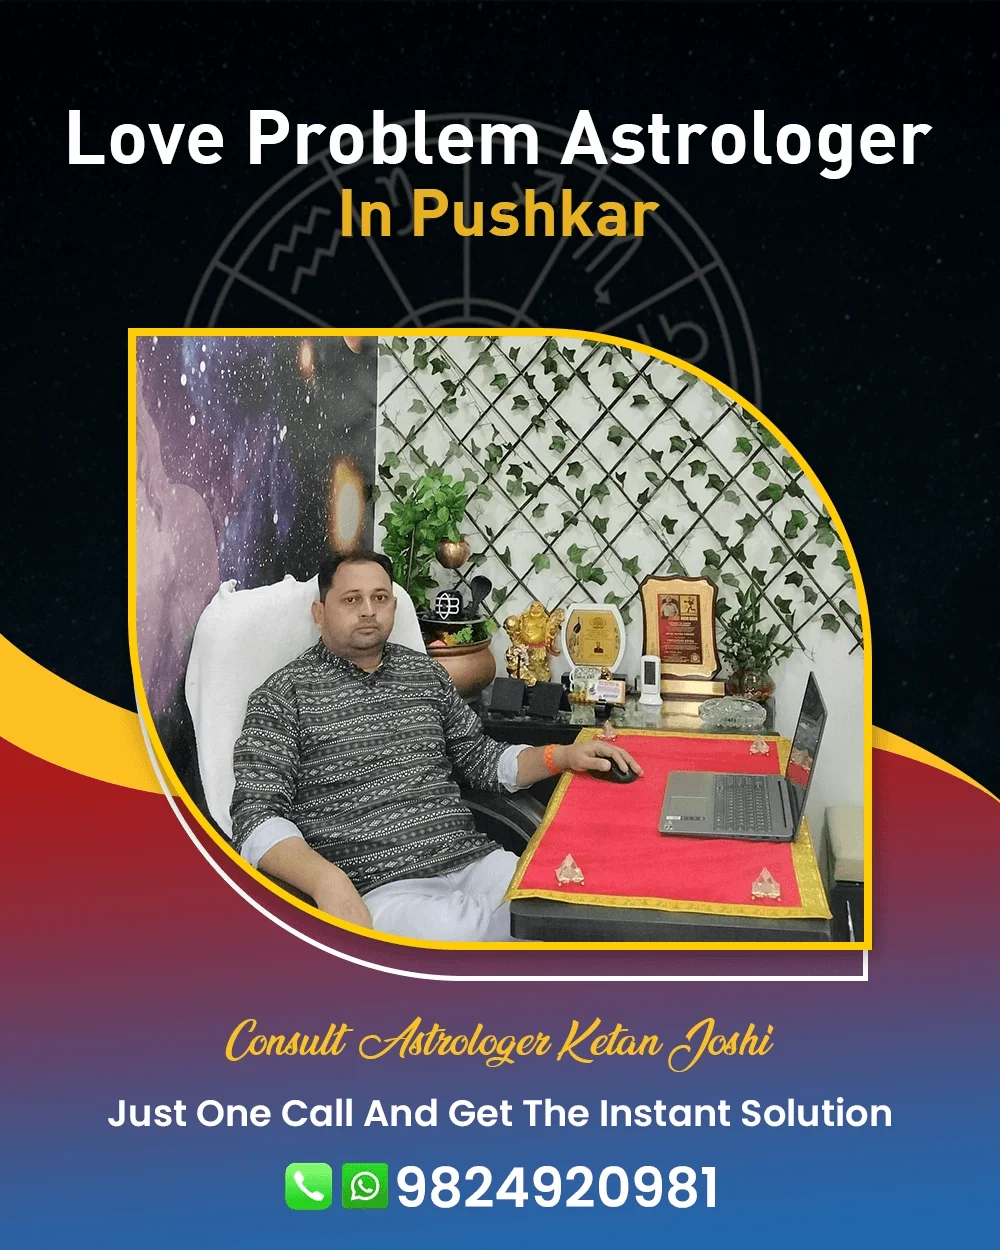 Love Problem Astrologer In Pushkar